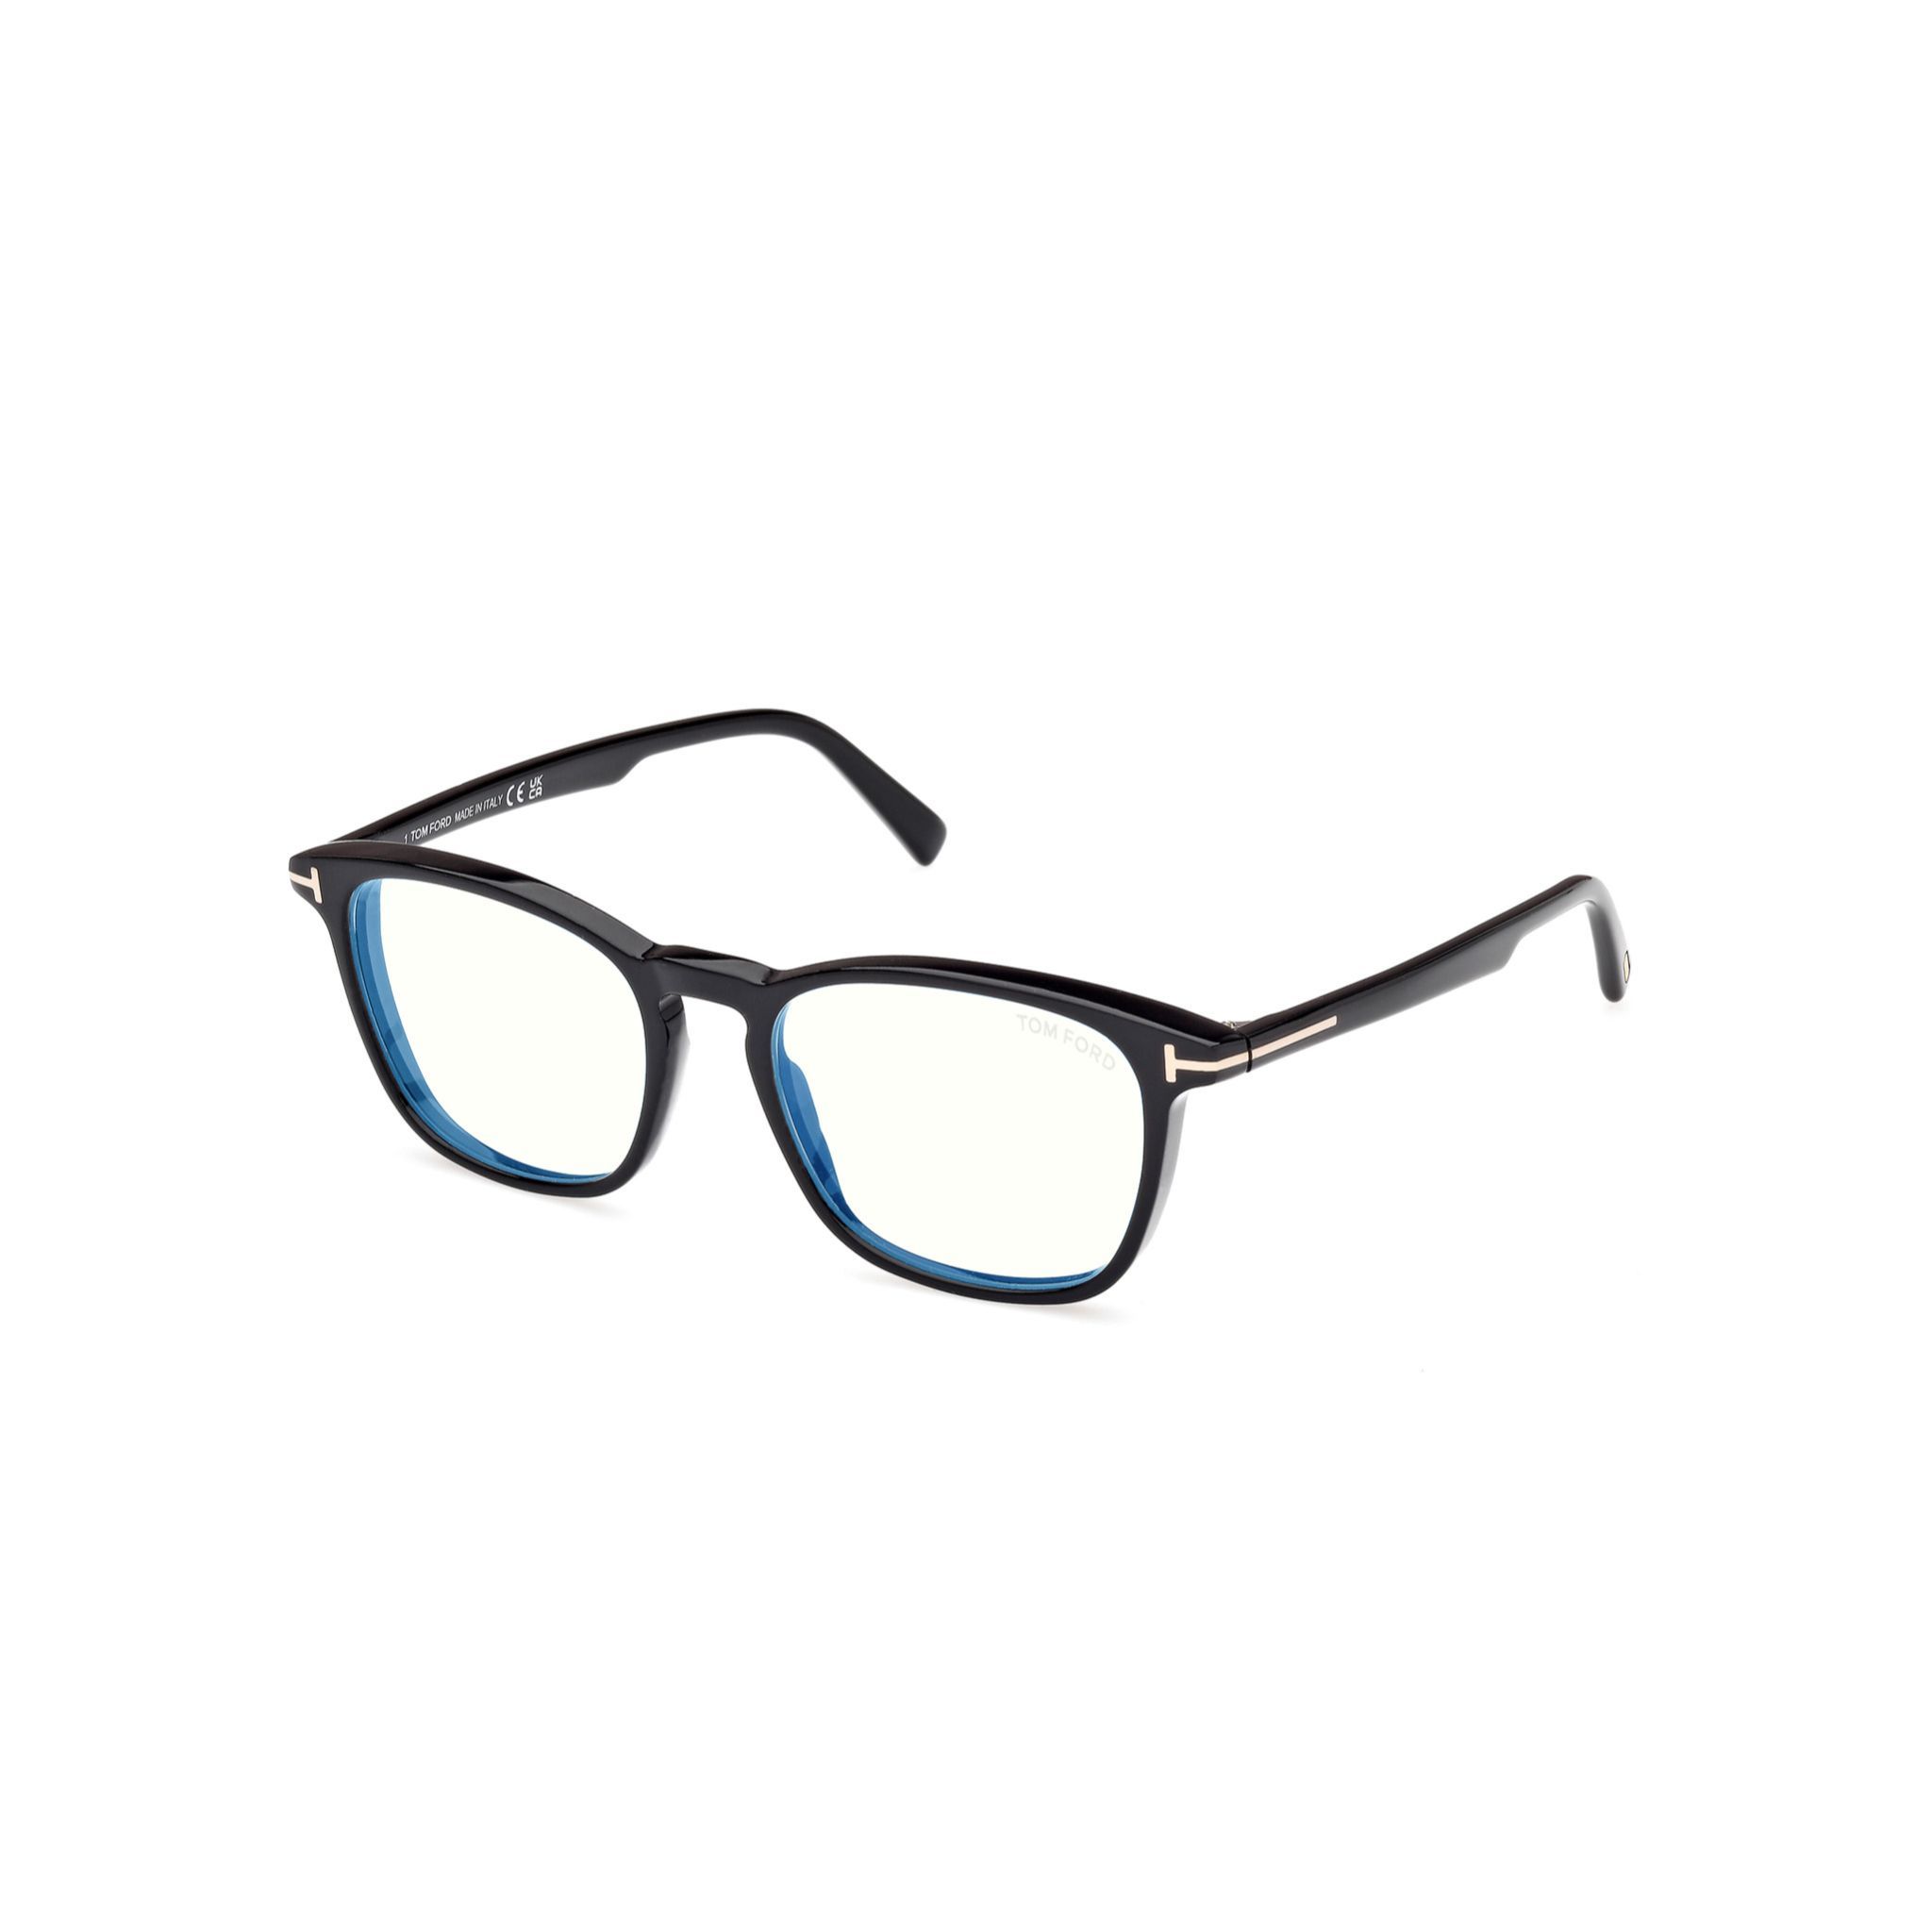 FT5960 Square Eyeglasses B001 - size 52